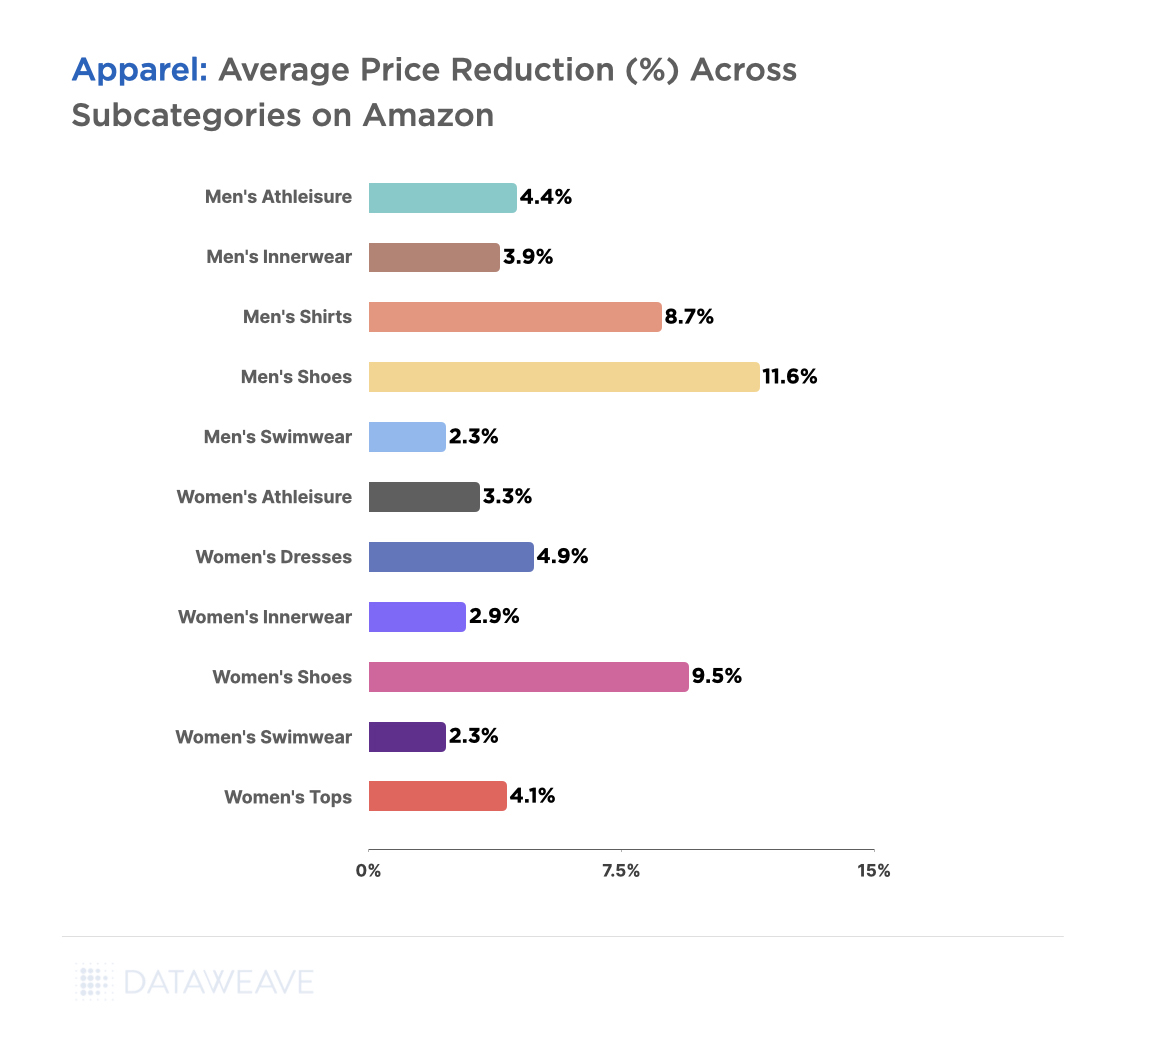 Apparel average price reduction across subcategories on Amazon.